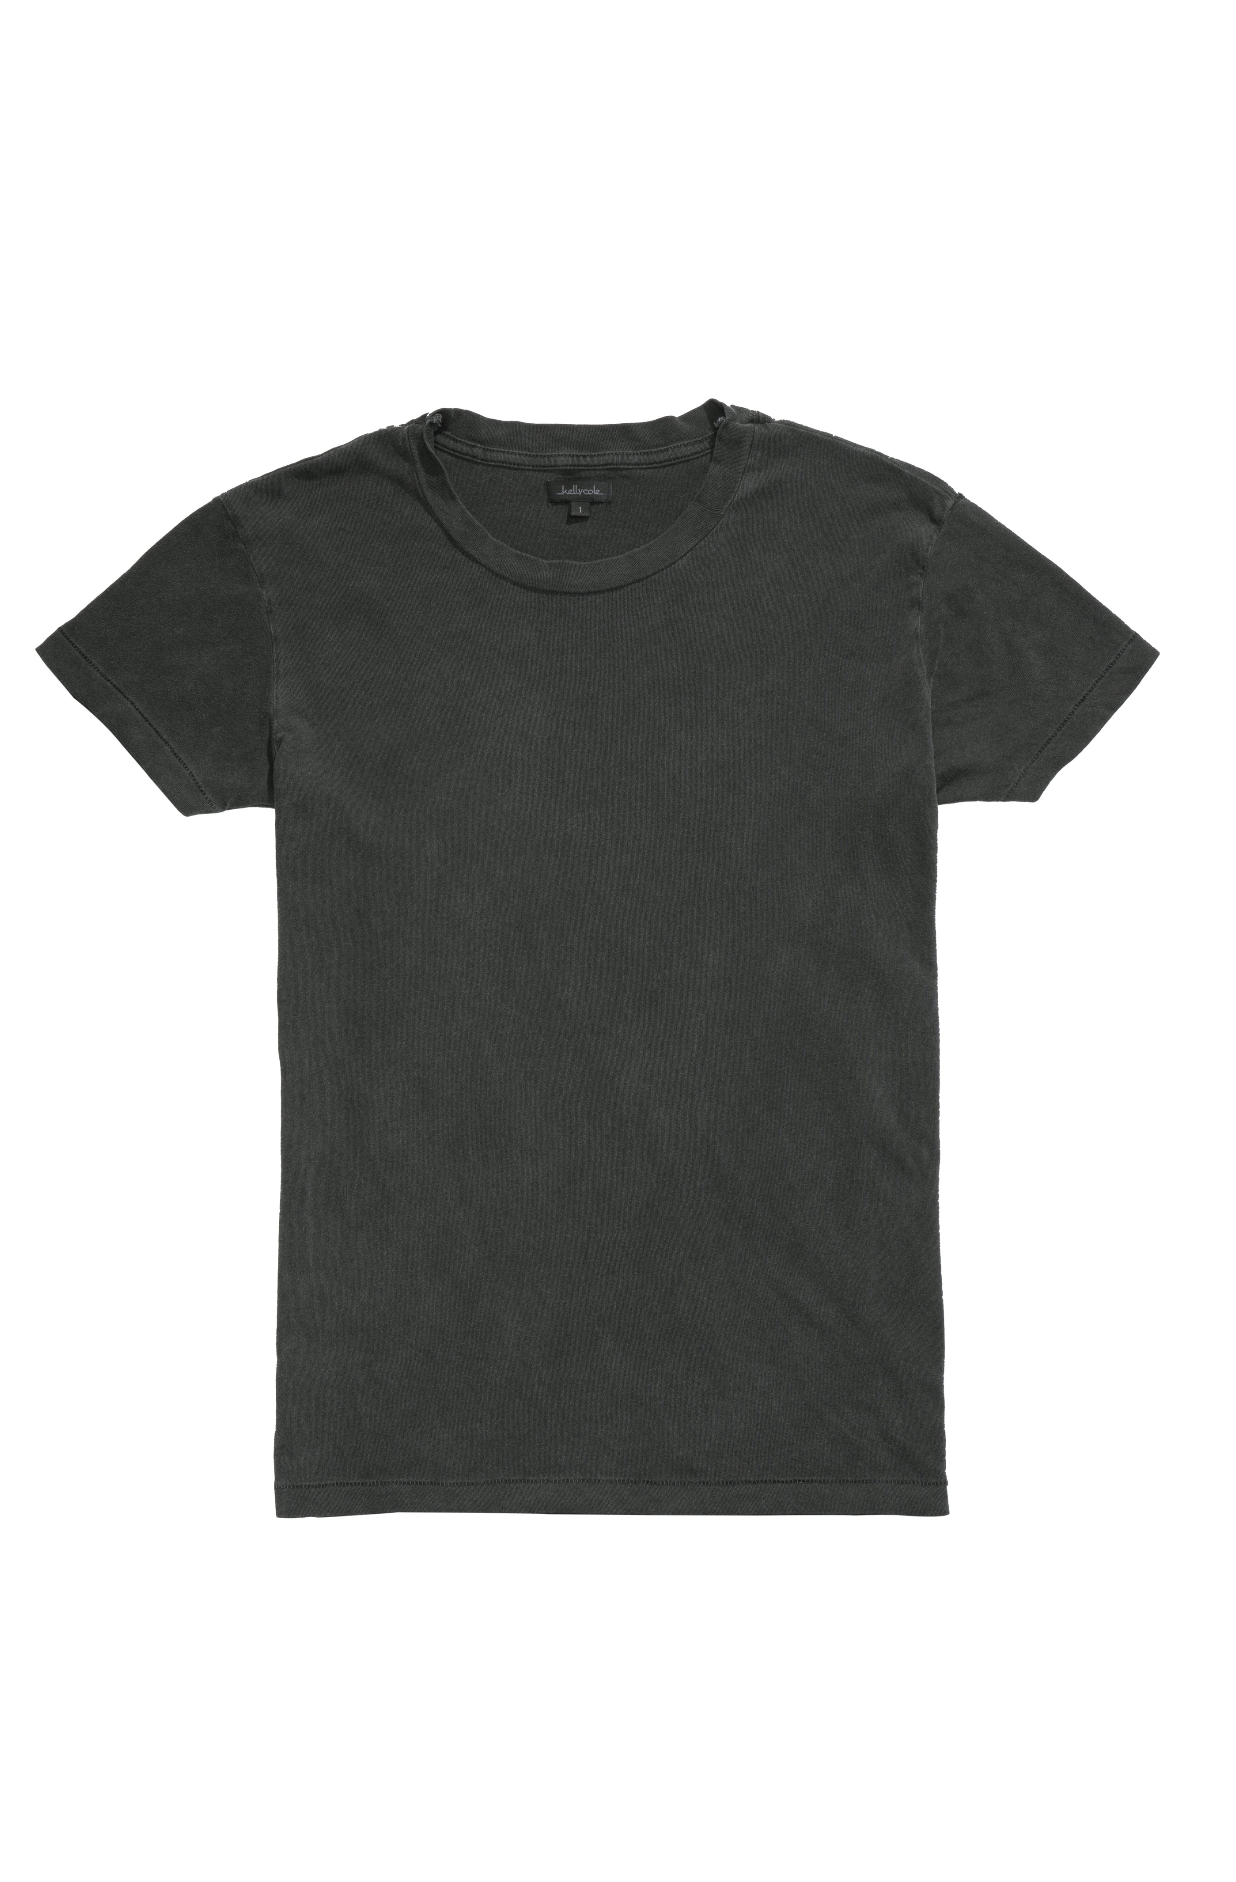 Kelly Cole Unisex Signature Blank T-Shirt - Charcoal